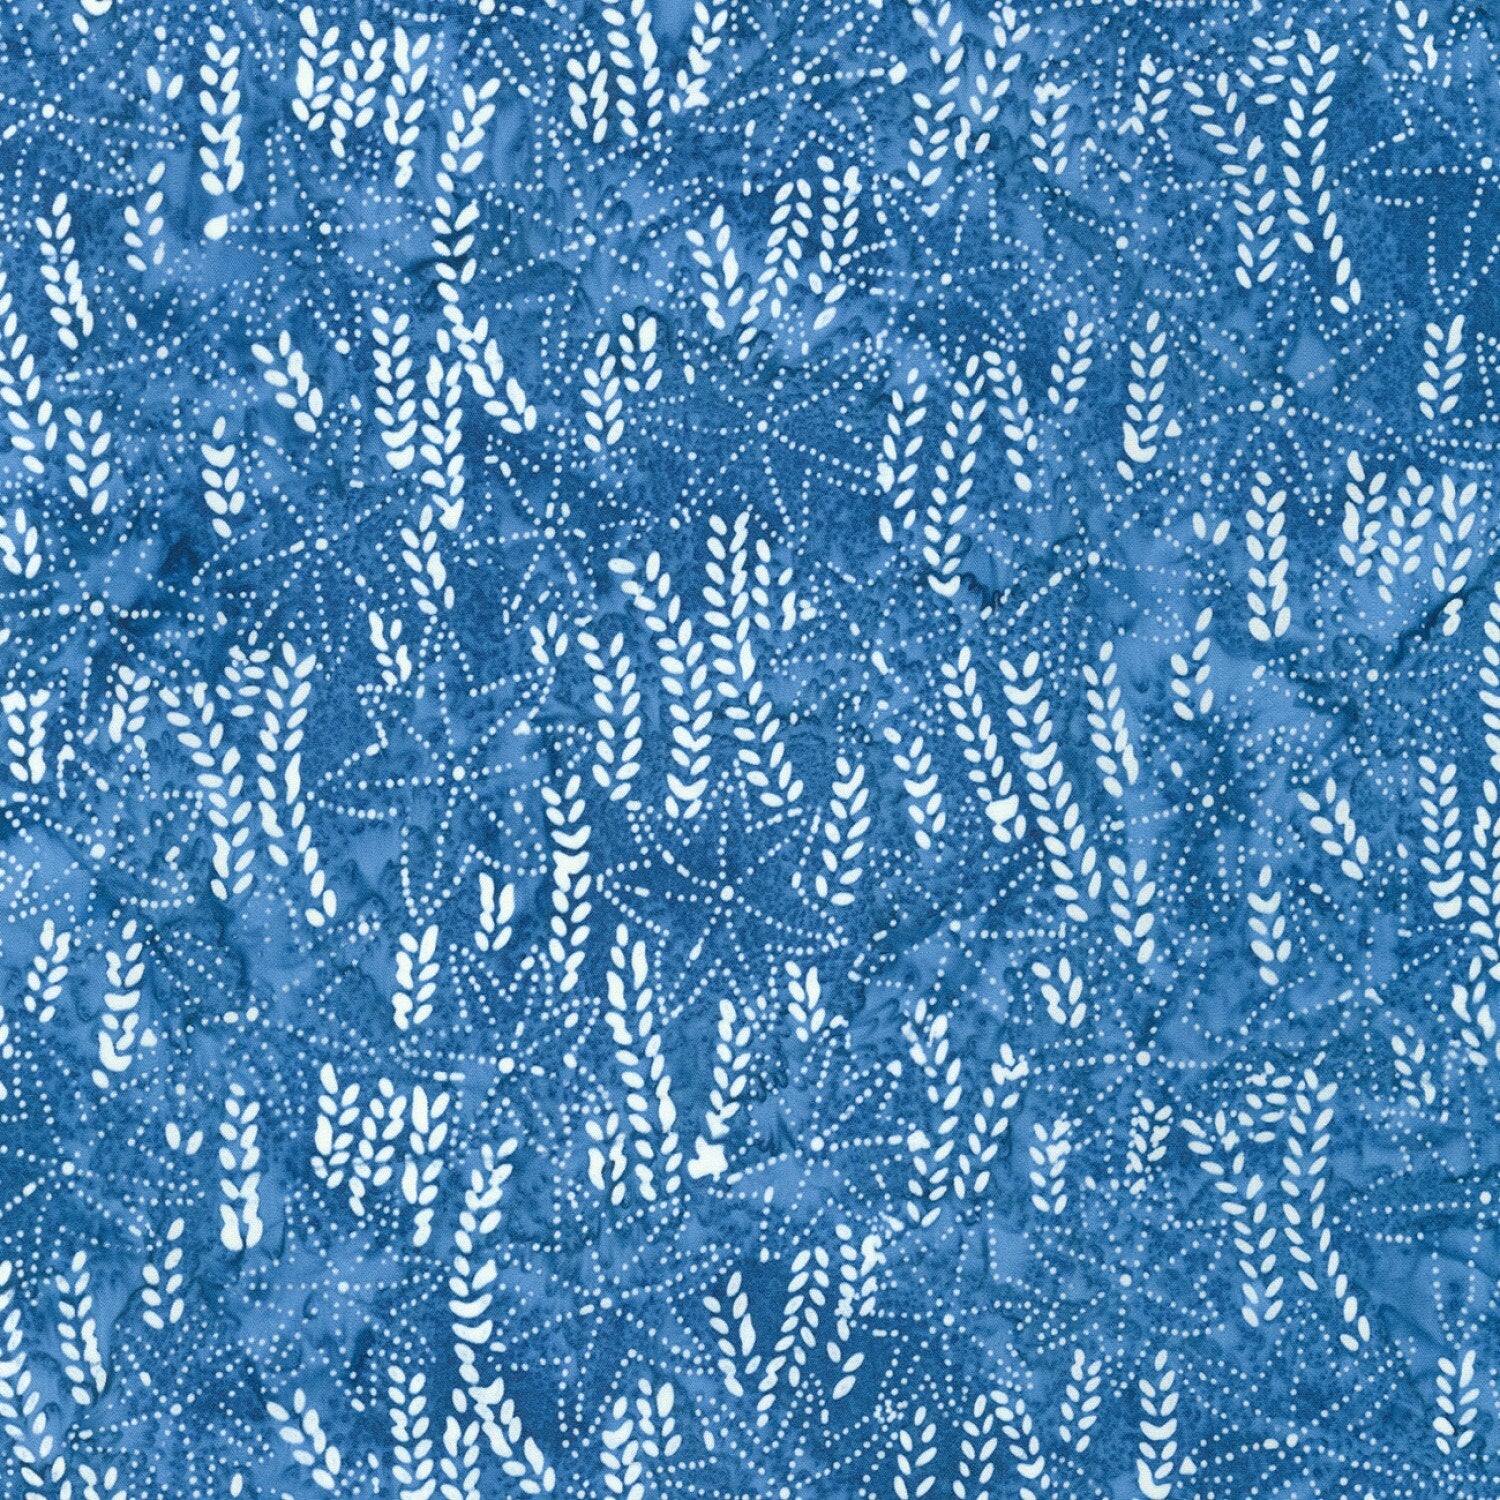 Artisan Batiks Kasuri Charm Squares, Robert Kaufman CHS-1009-42, Shades of Blue White Batik Charm Pack, 5" Inch Precut Fabric Squares